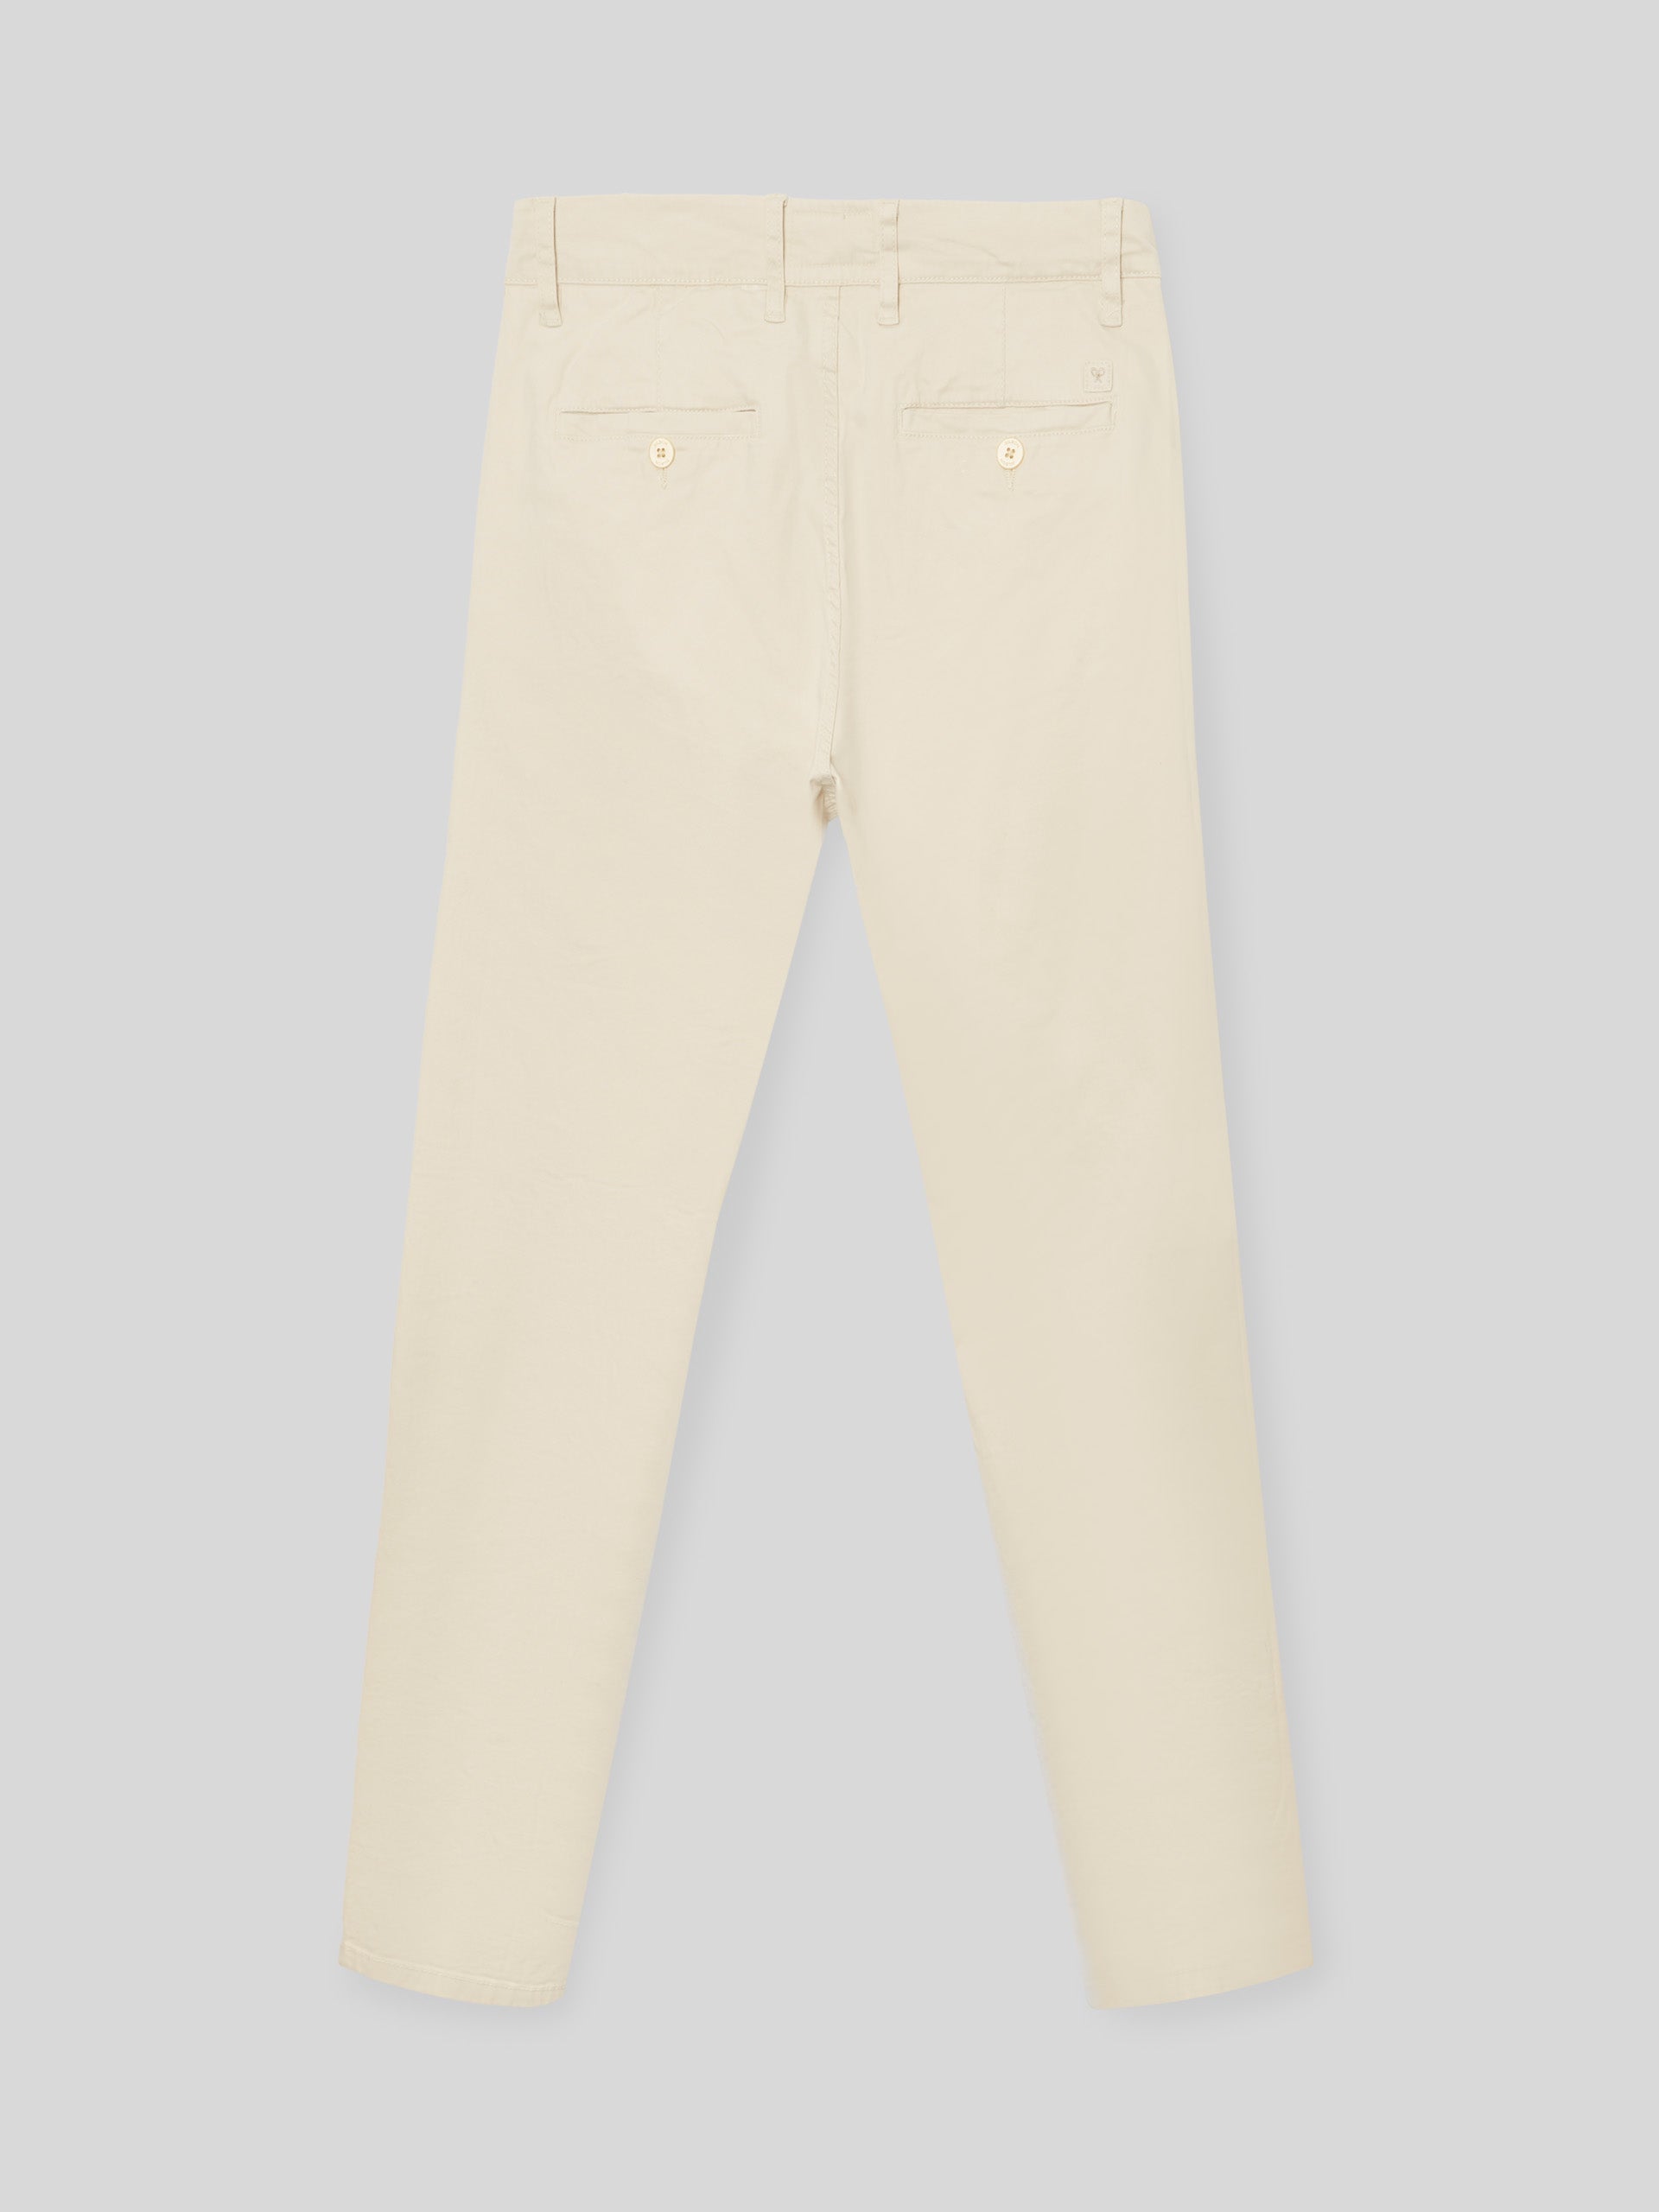 Light beige chino sport pants